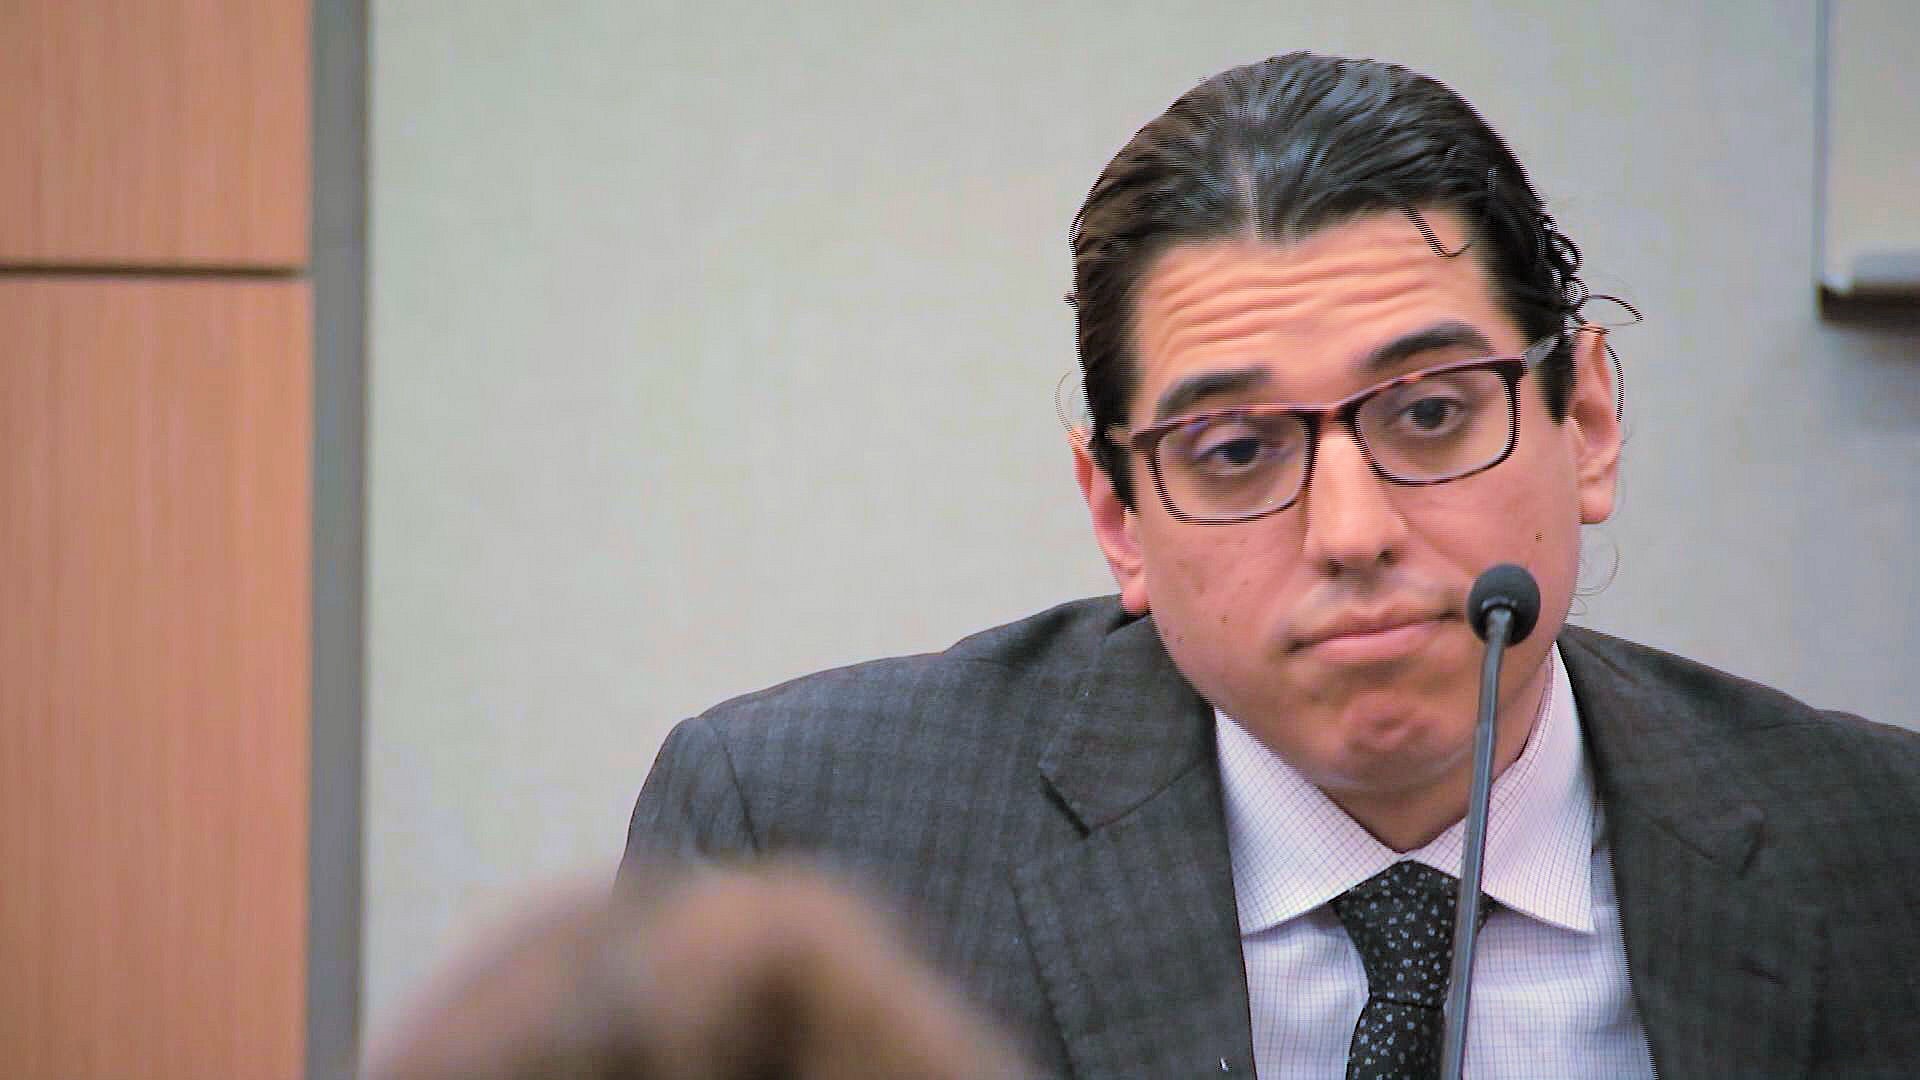 Jesse Alvarez testifies he shot victim six times in self defense.